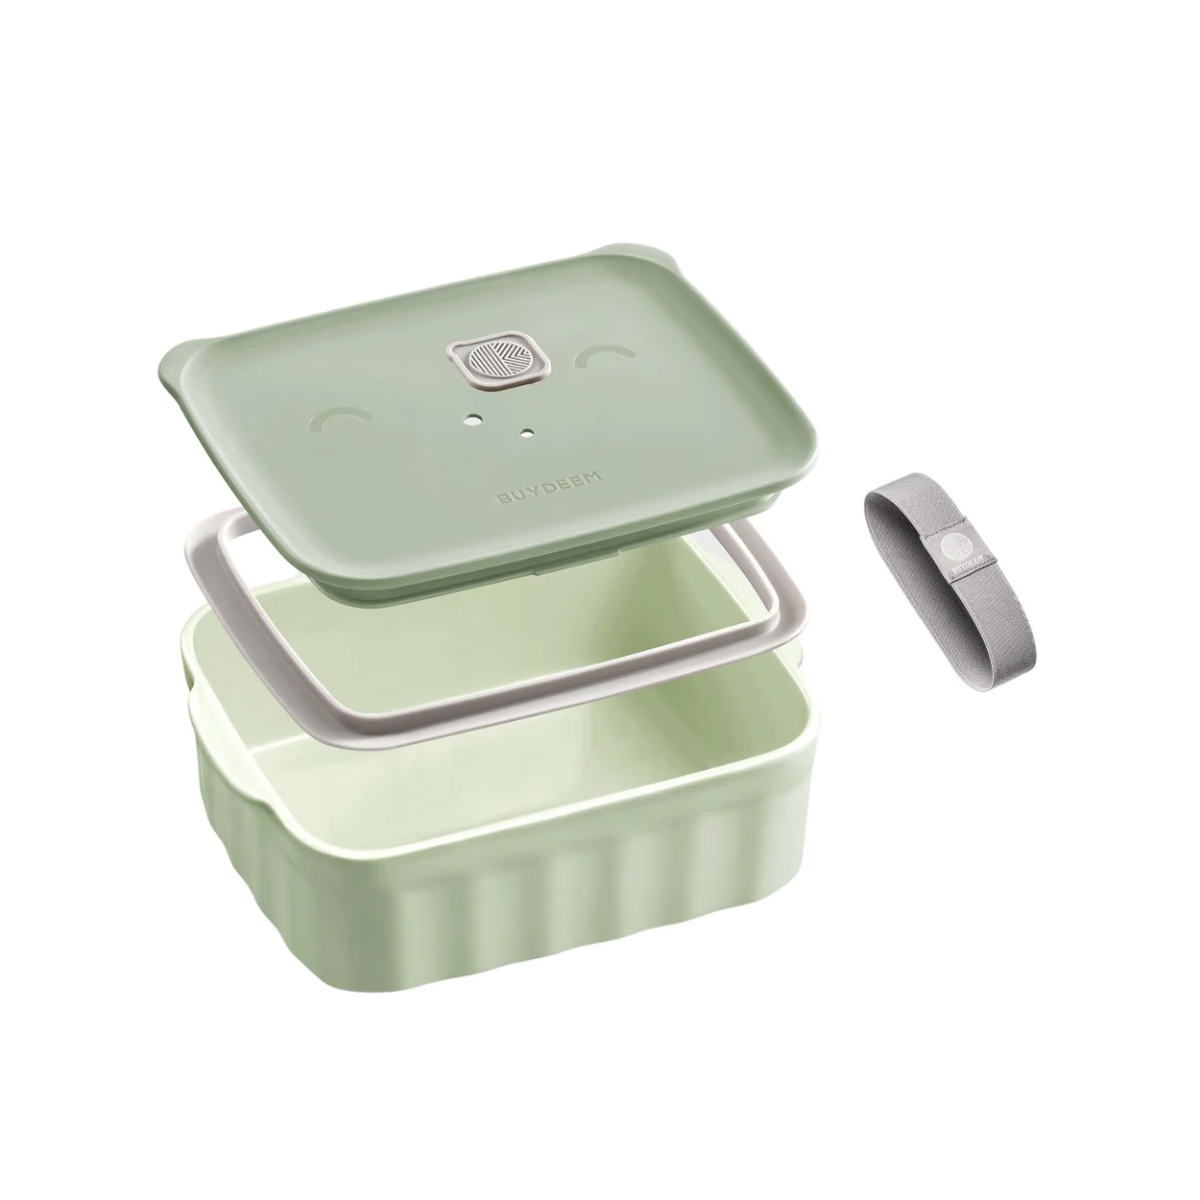 BUYDEEM CT1006 Ceramic Food Storage Bento Lunch Box